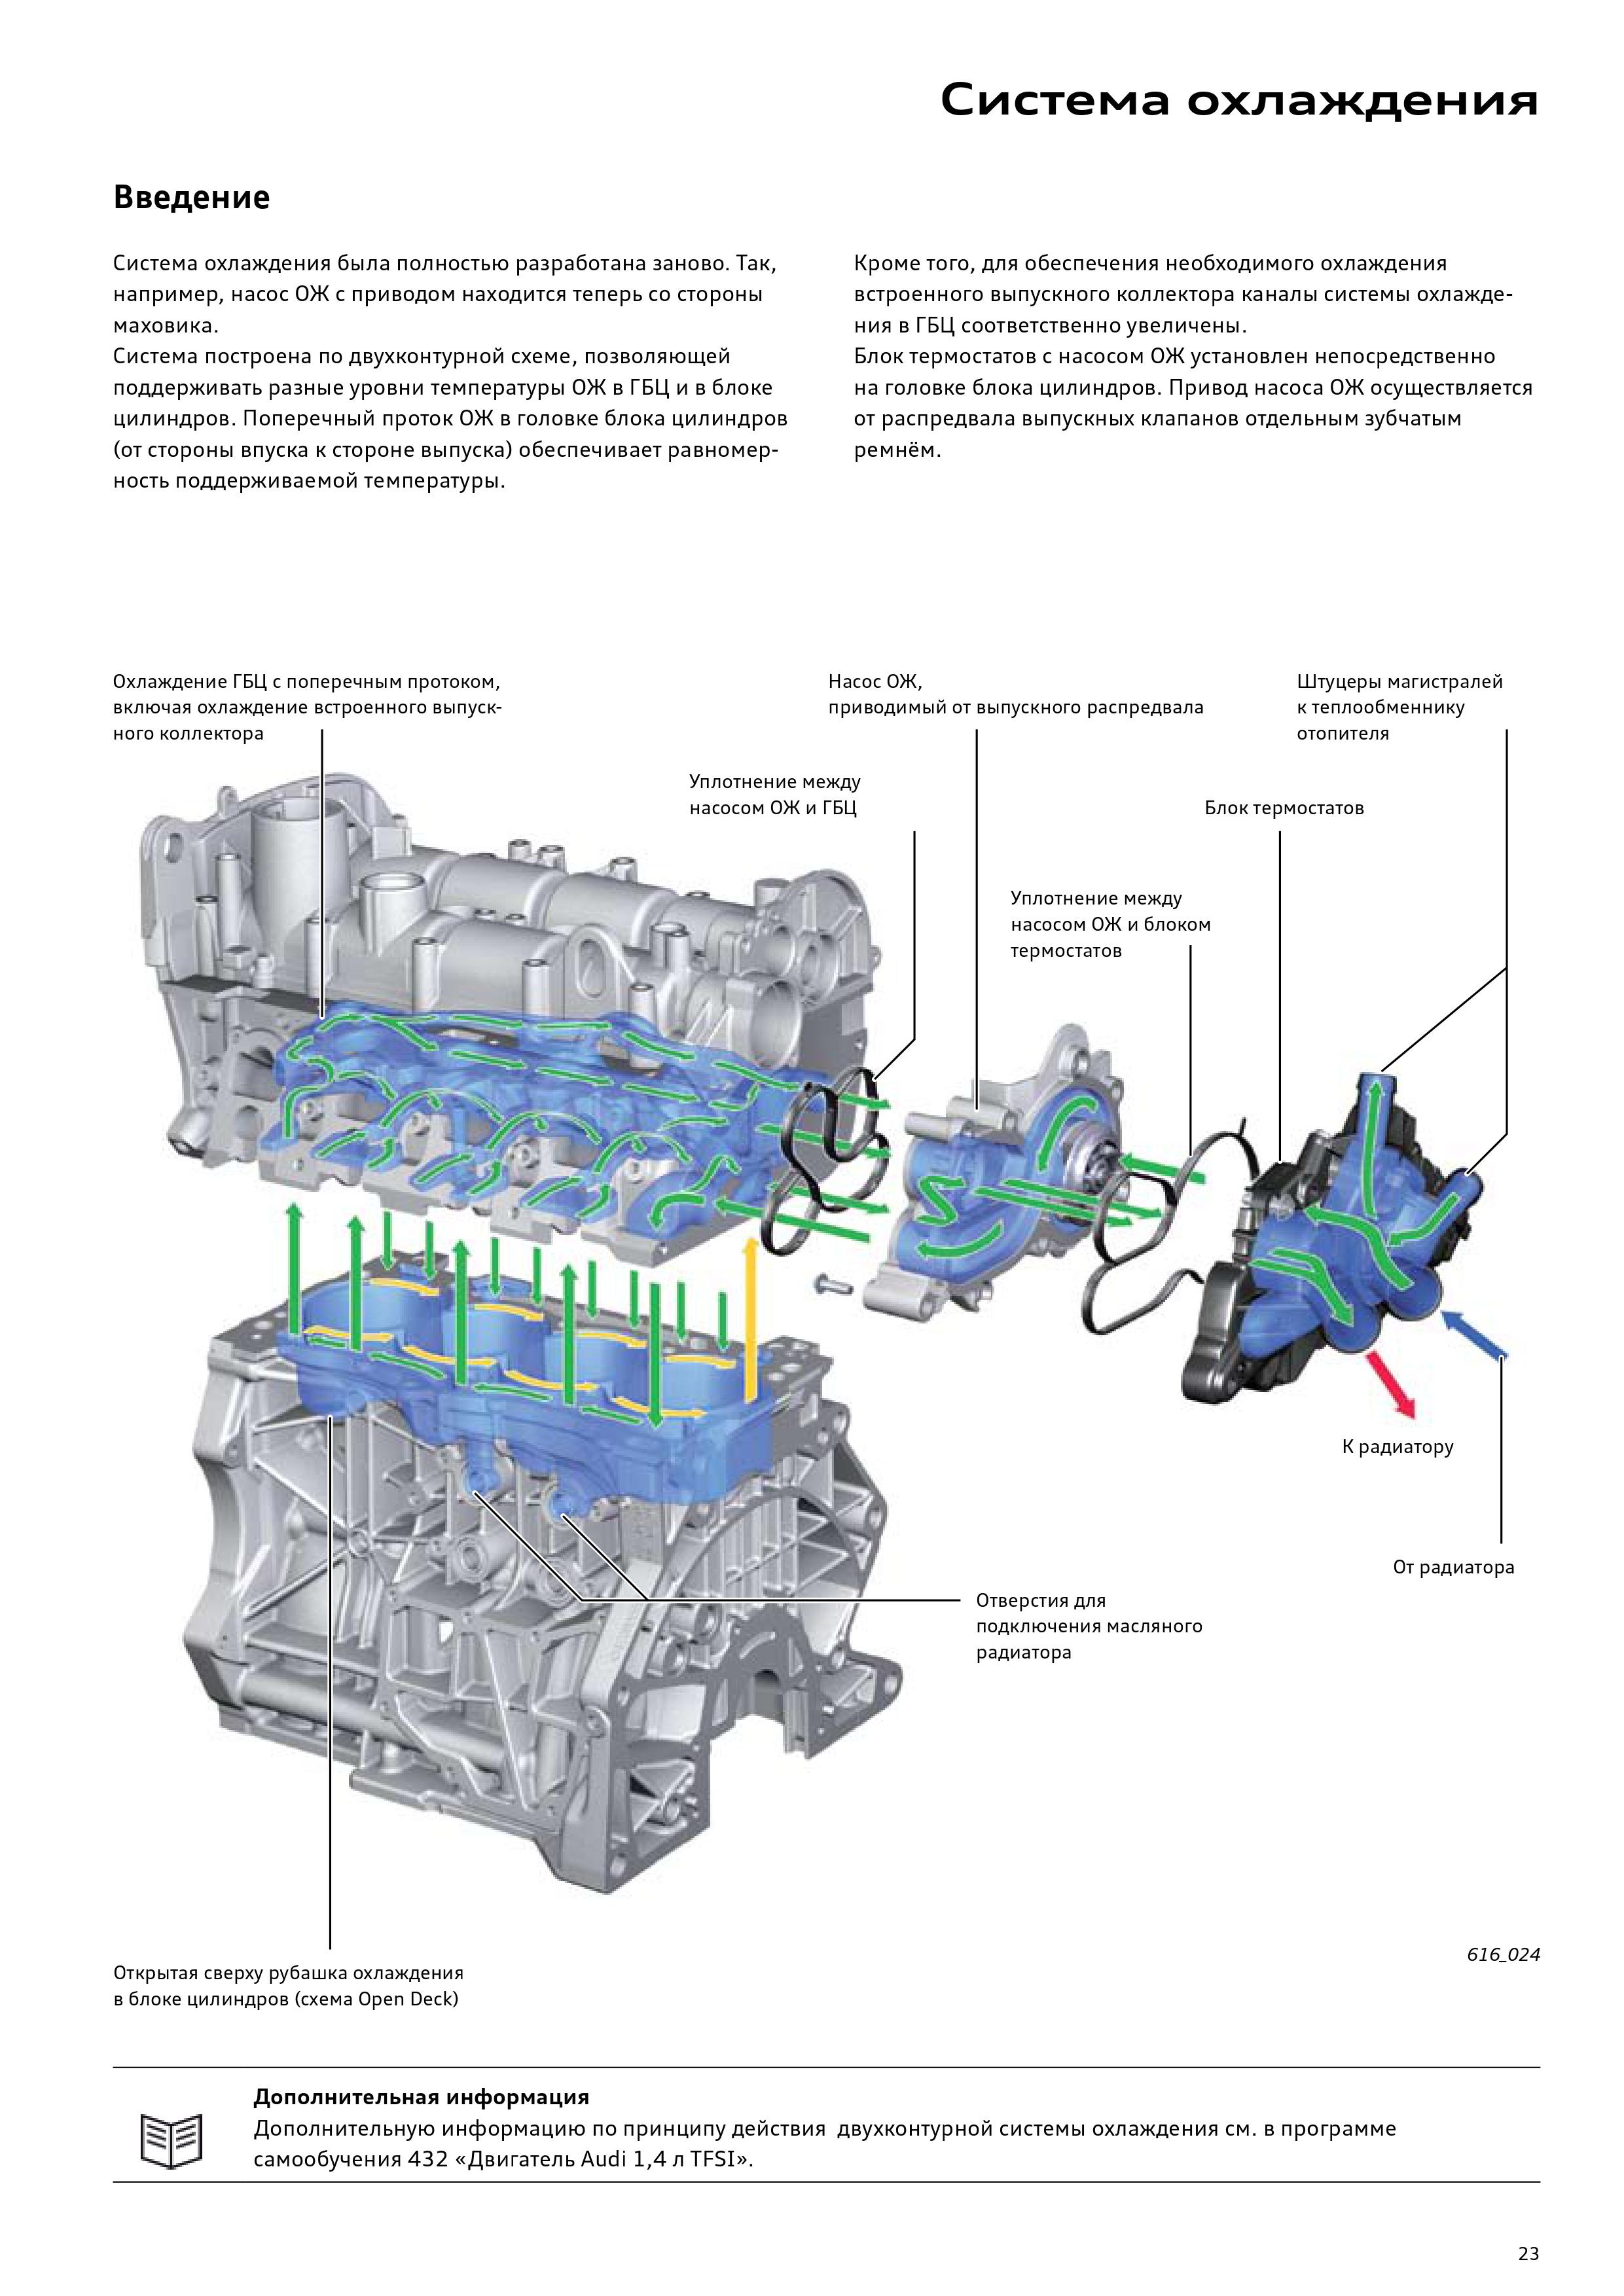 Двигатели фольксваген: характеристики, неисправности и тюнинг